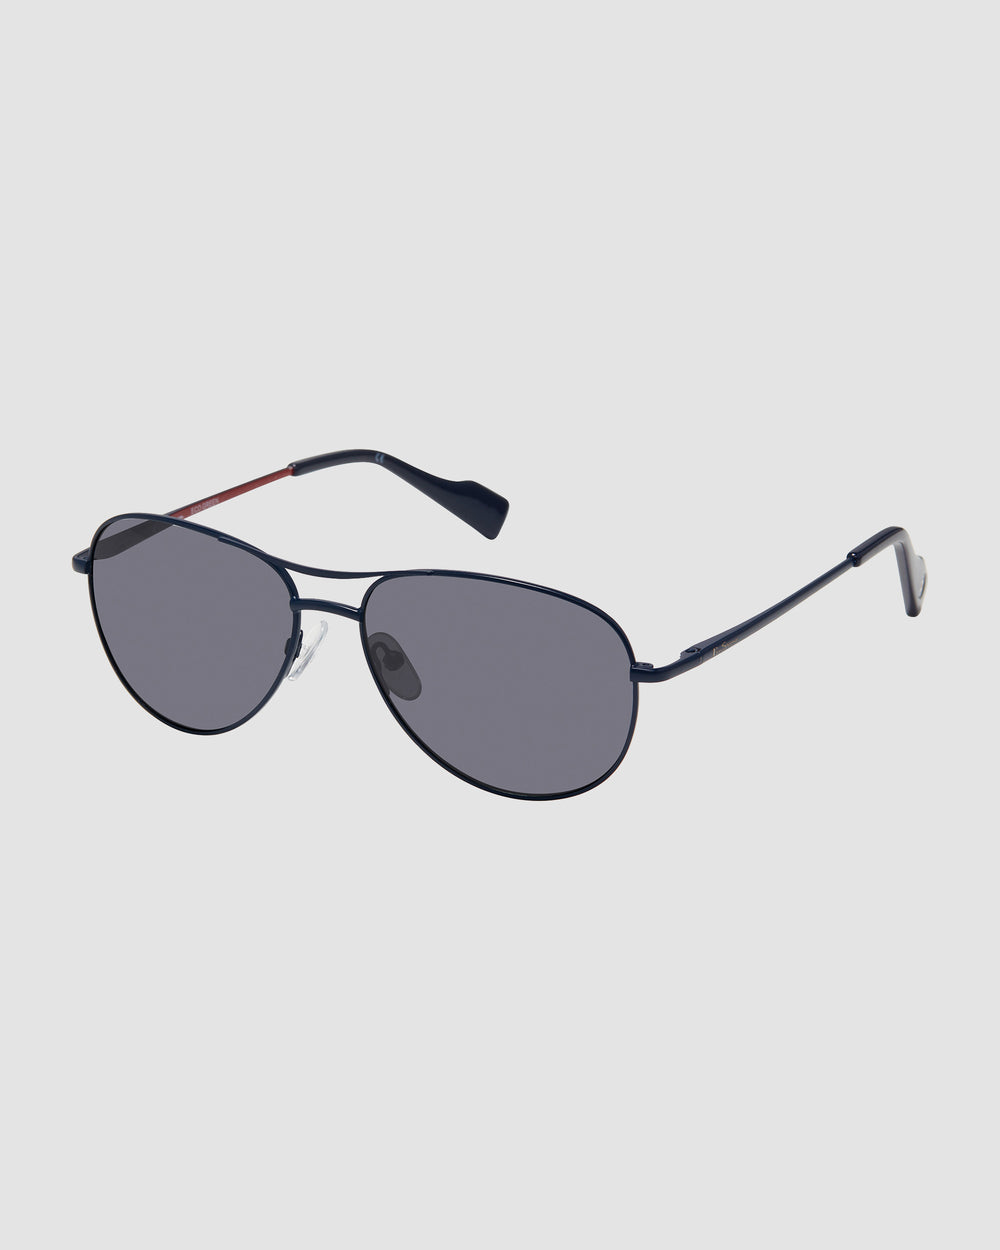 Leo Eco-Green Sunglasses - Matte Navy/Grey